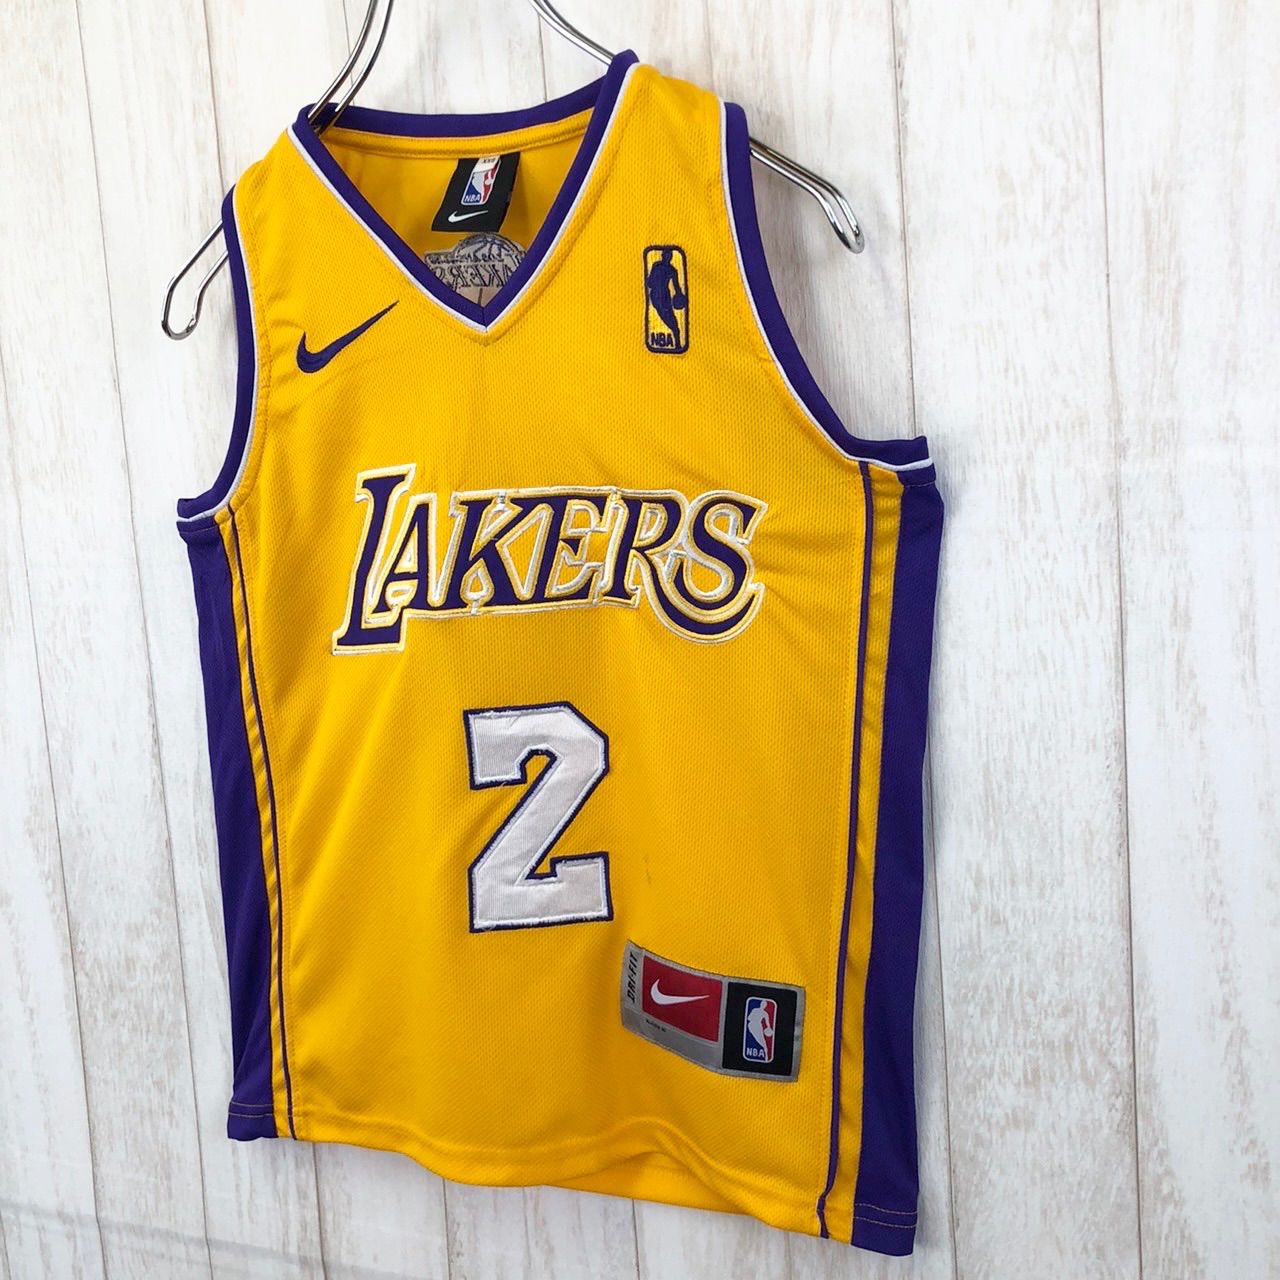 NIKE ナイキ NBA ロサンゼルス レイカーズ LAKERS バスケ ゲームシャツ ユニフォーム タンクトップ メルカリShops